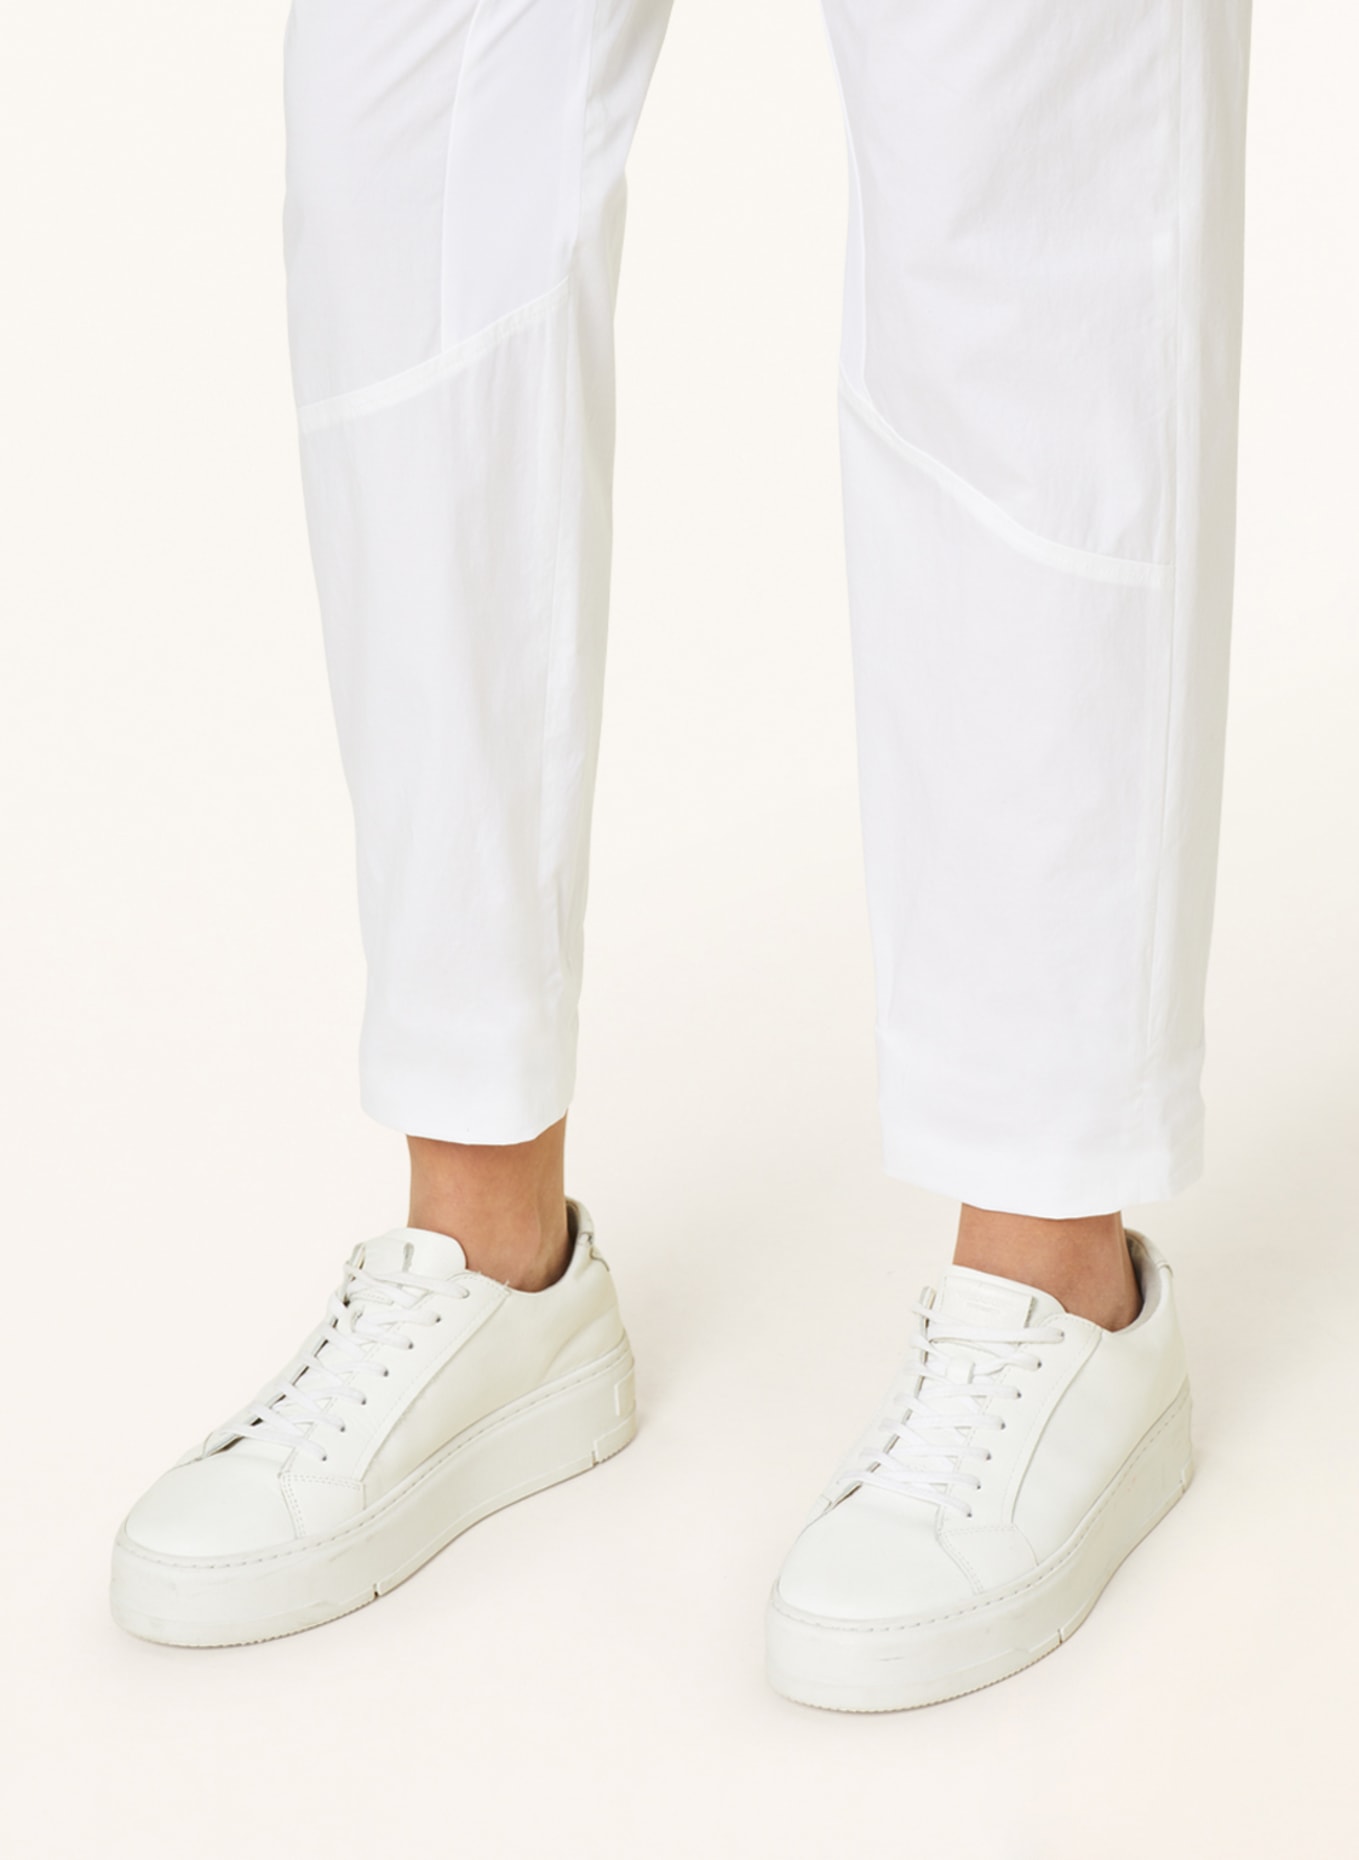 ULLI EHRLICH SPORTALM Pants in jogger style, Color: WHITE (Image 5)